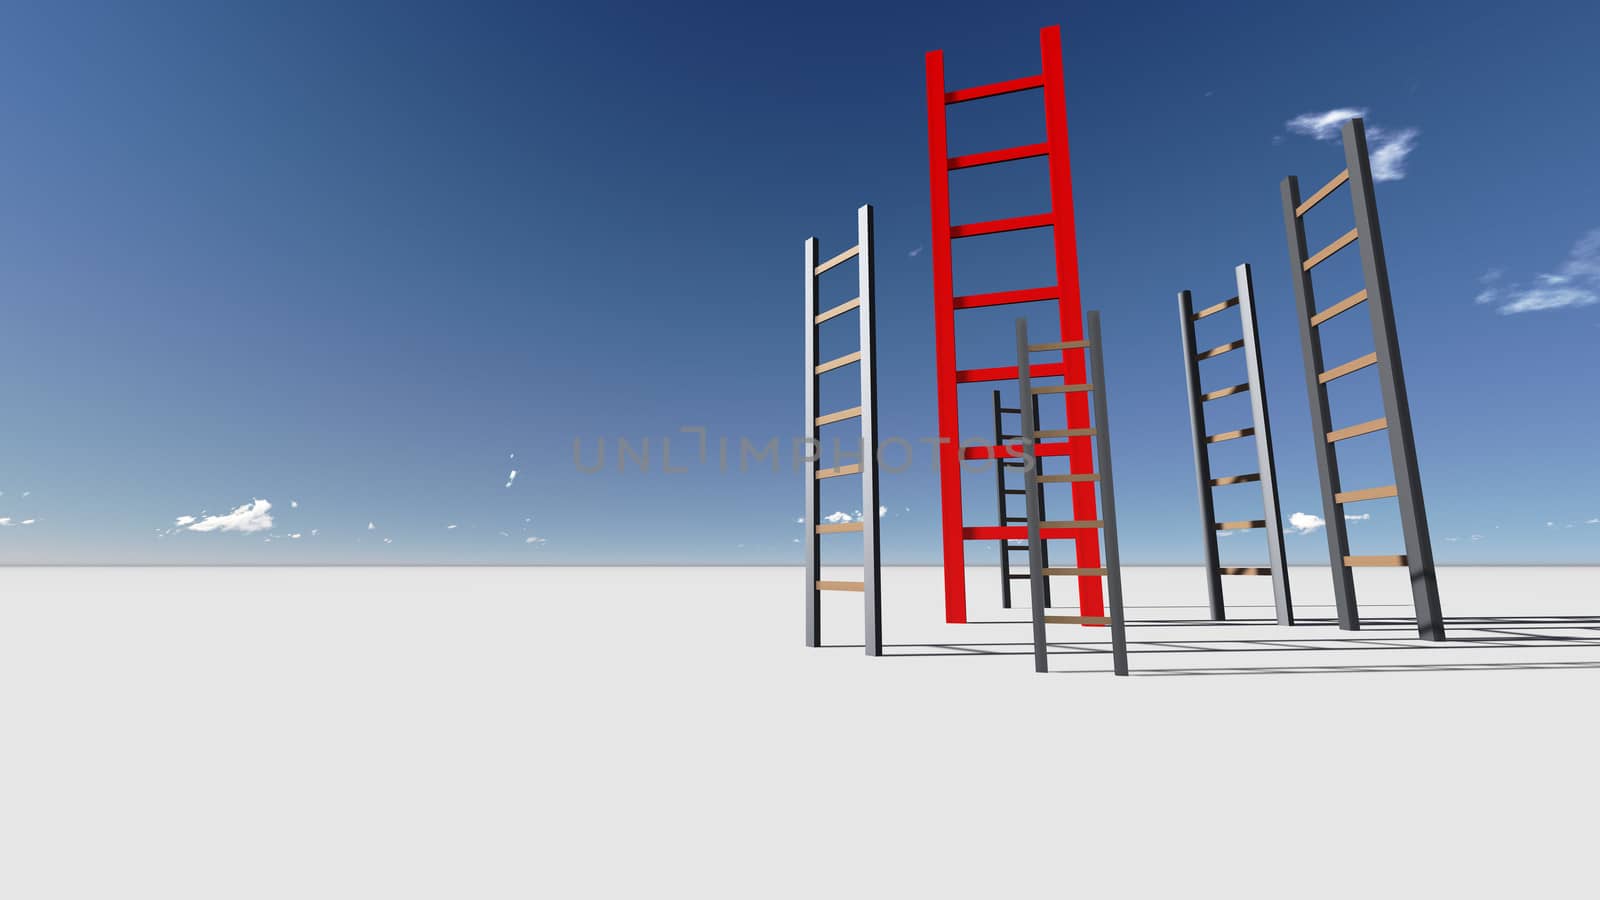 Ladder of Success by vitanovski